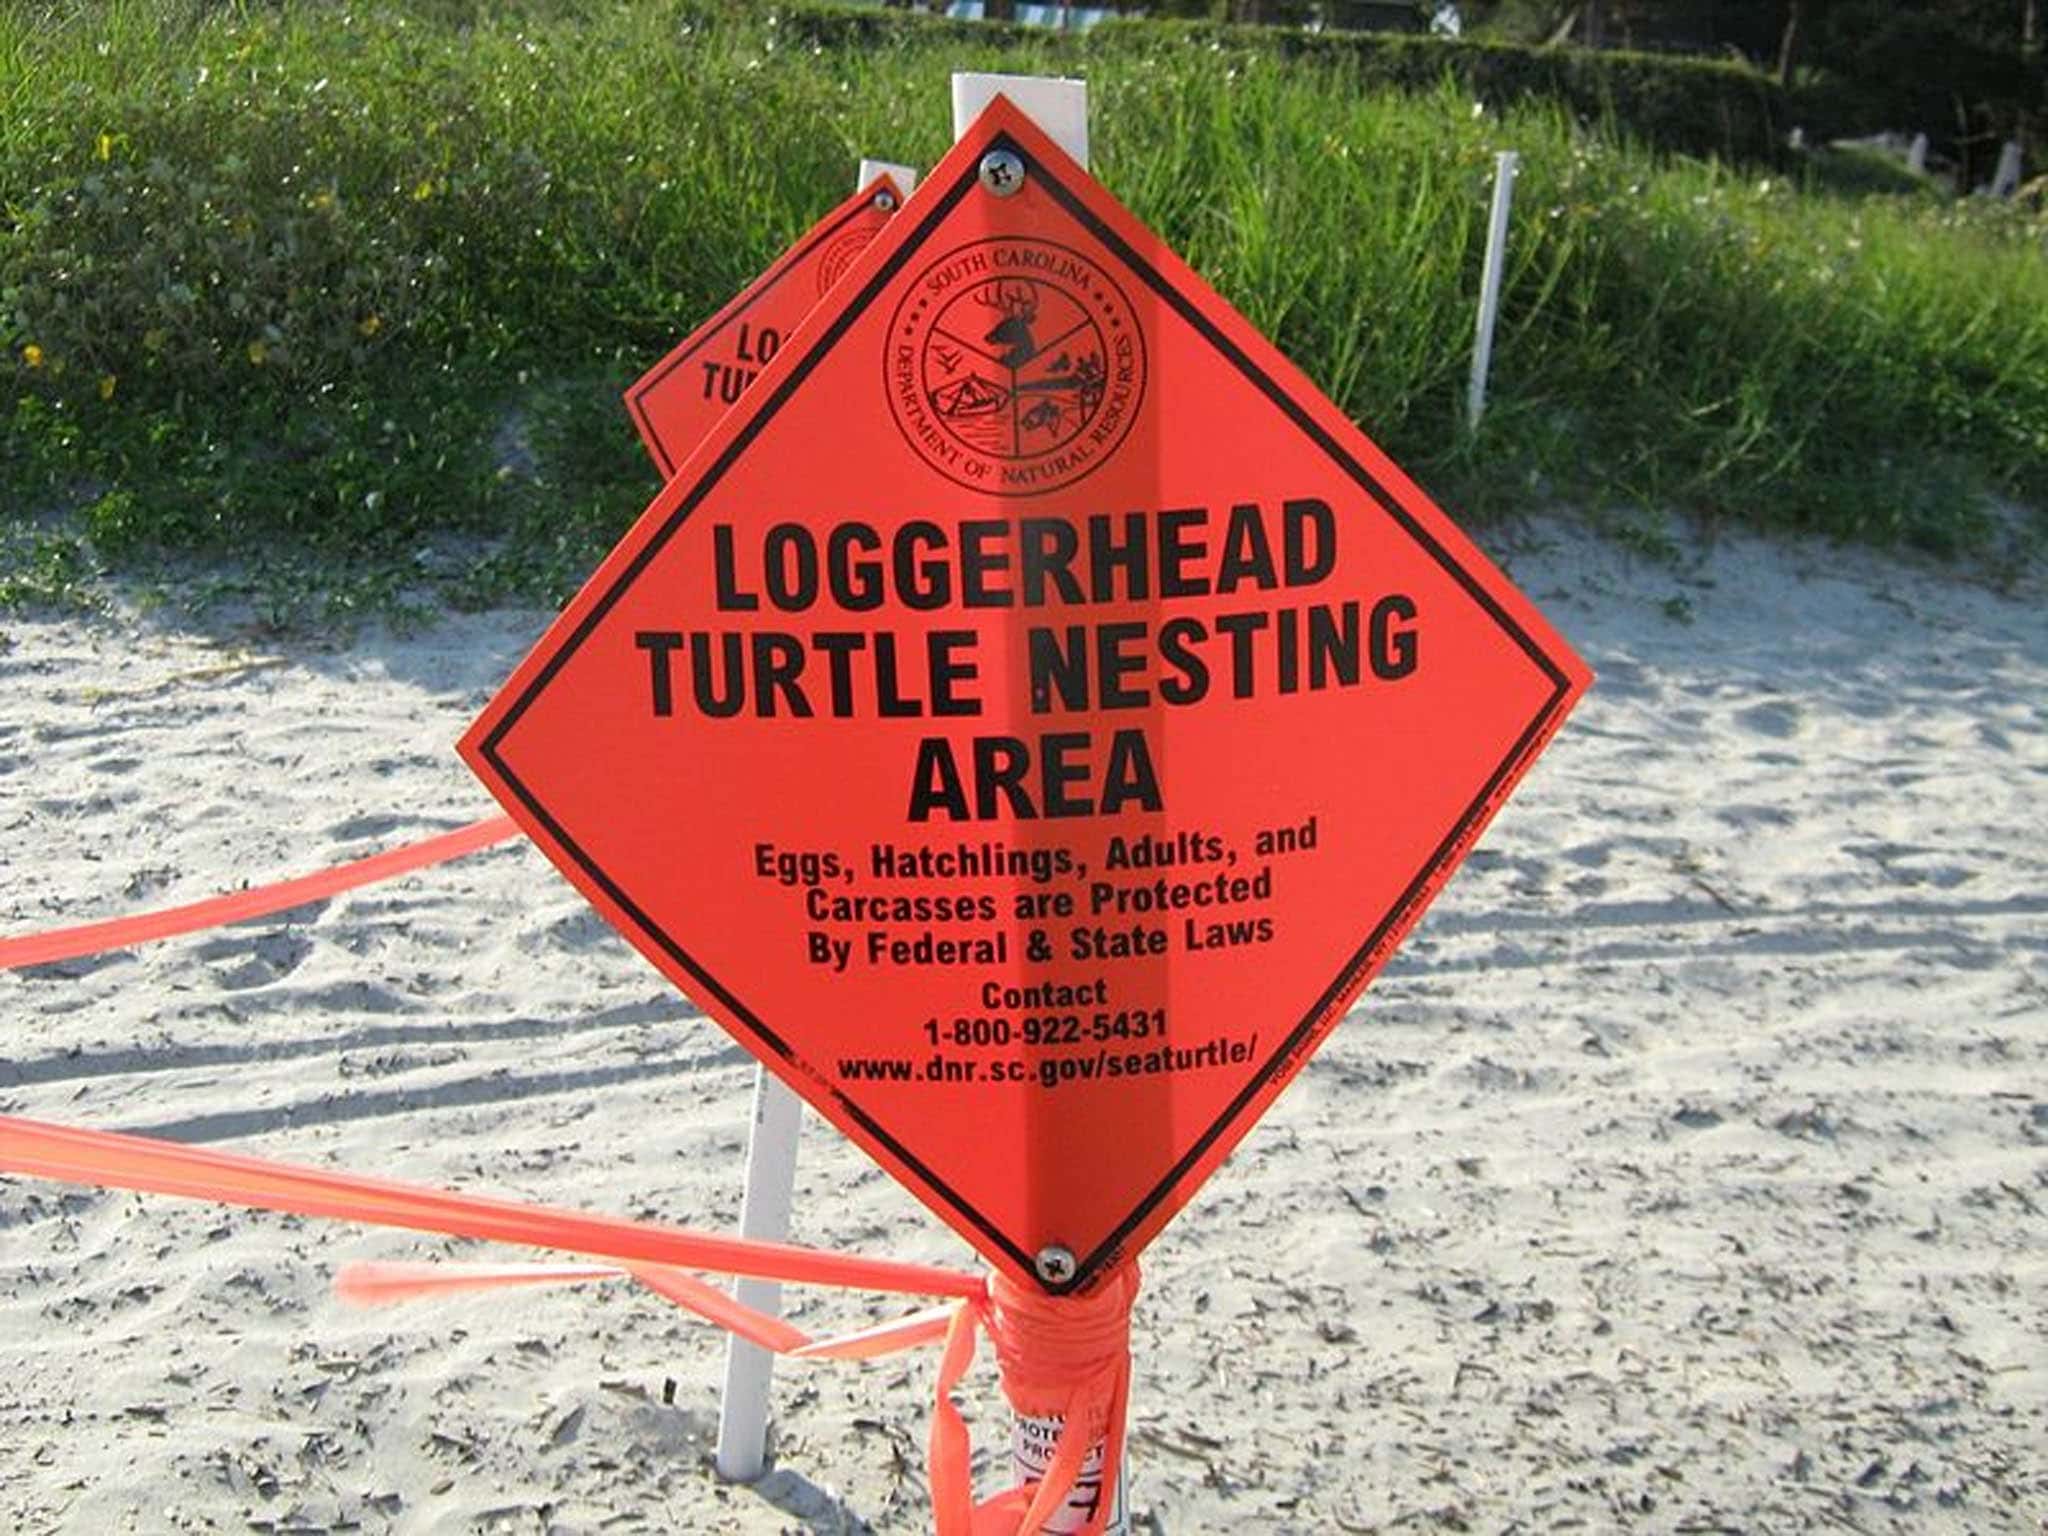 LoggerHead Turtle Nesting Area Warning Sign